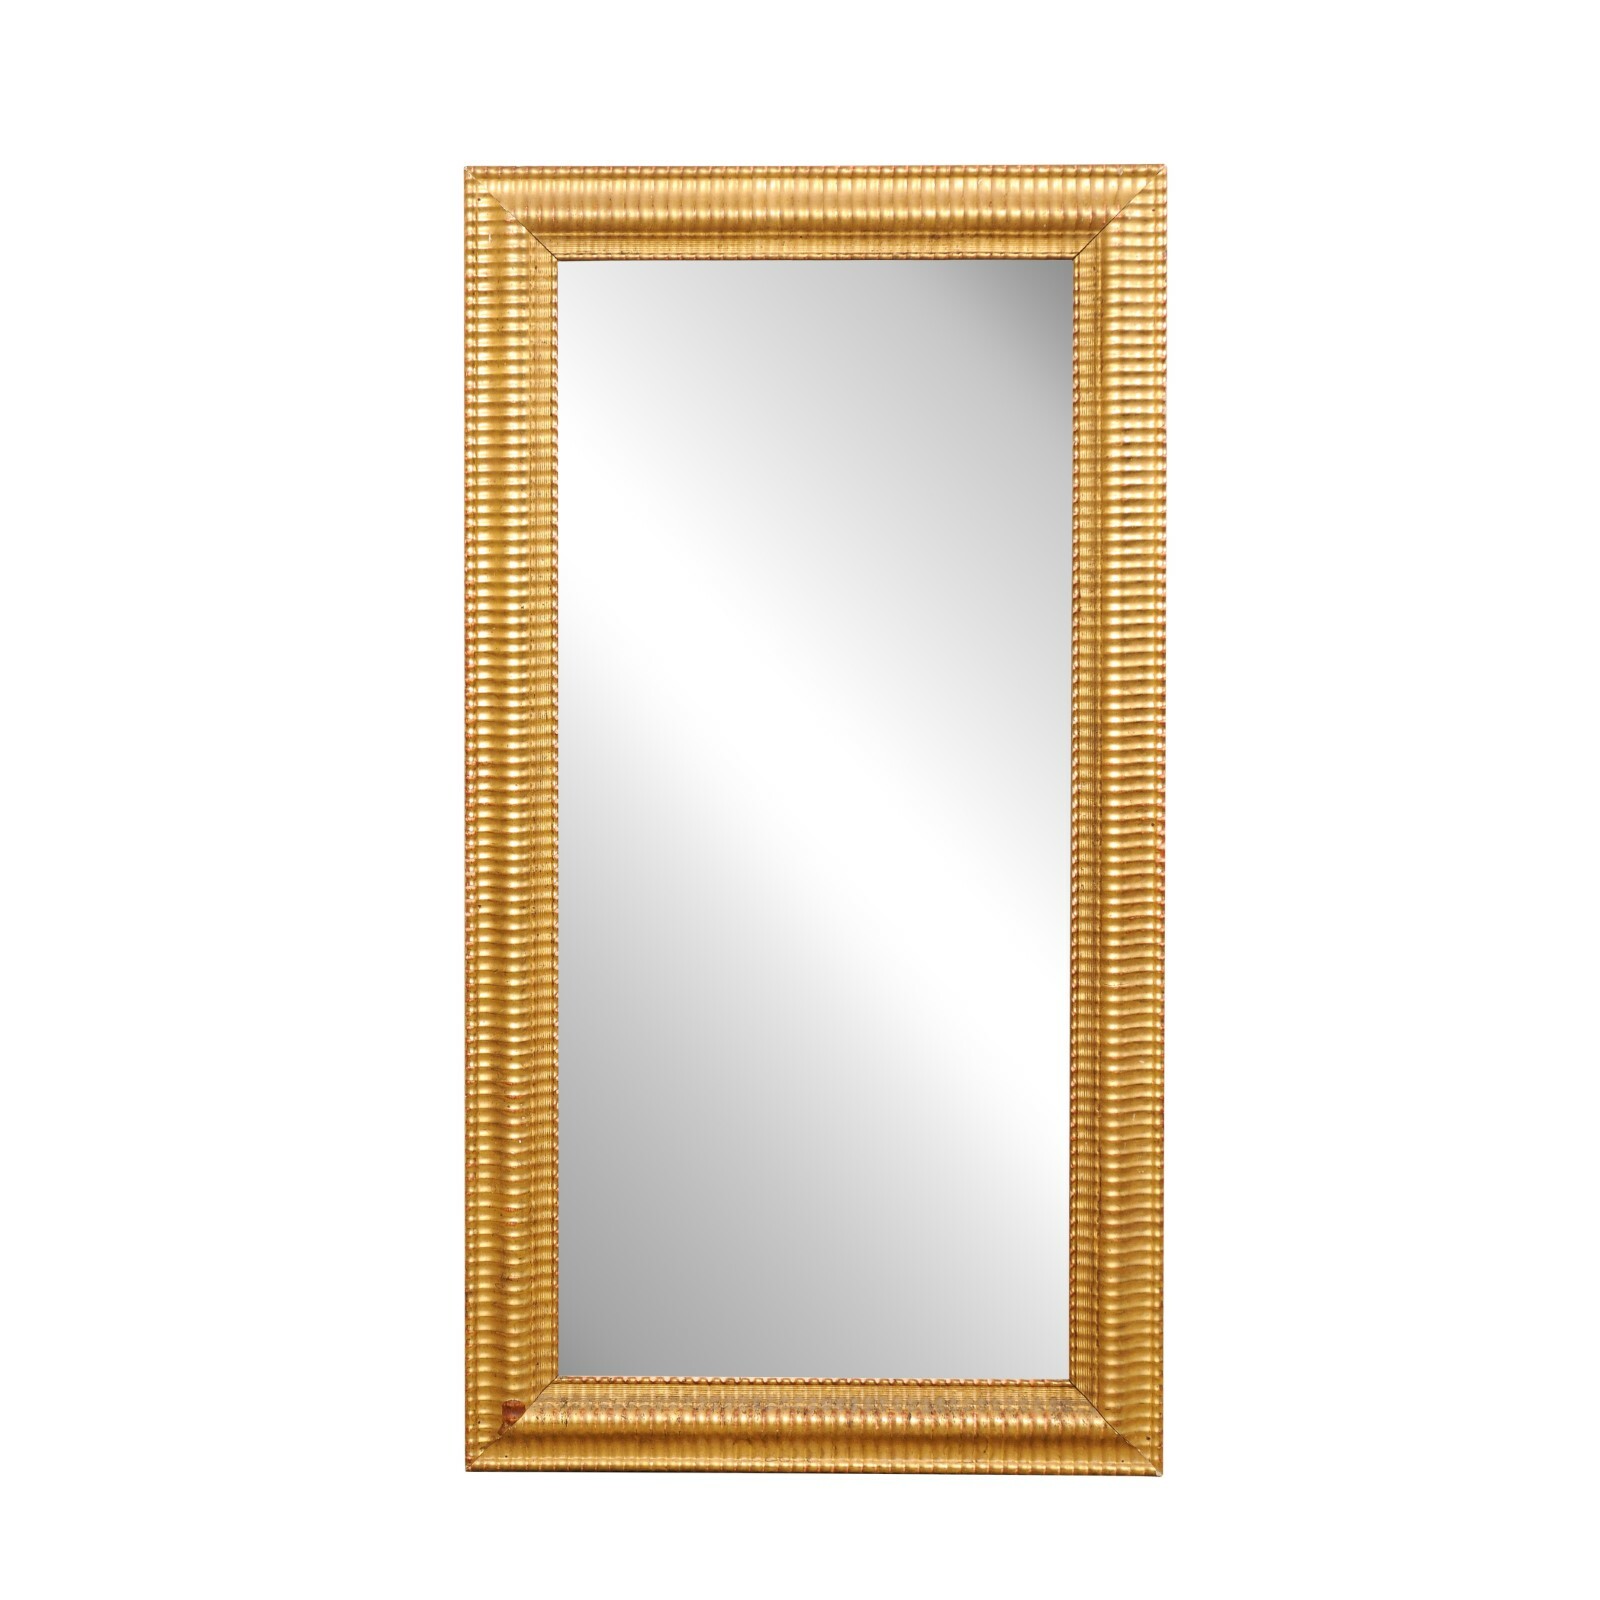 19th C. French Rectangular Gilt Wood Mirror